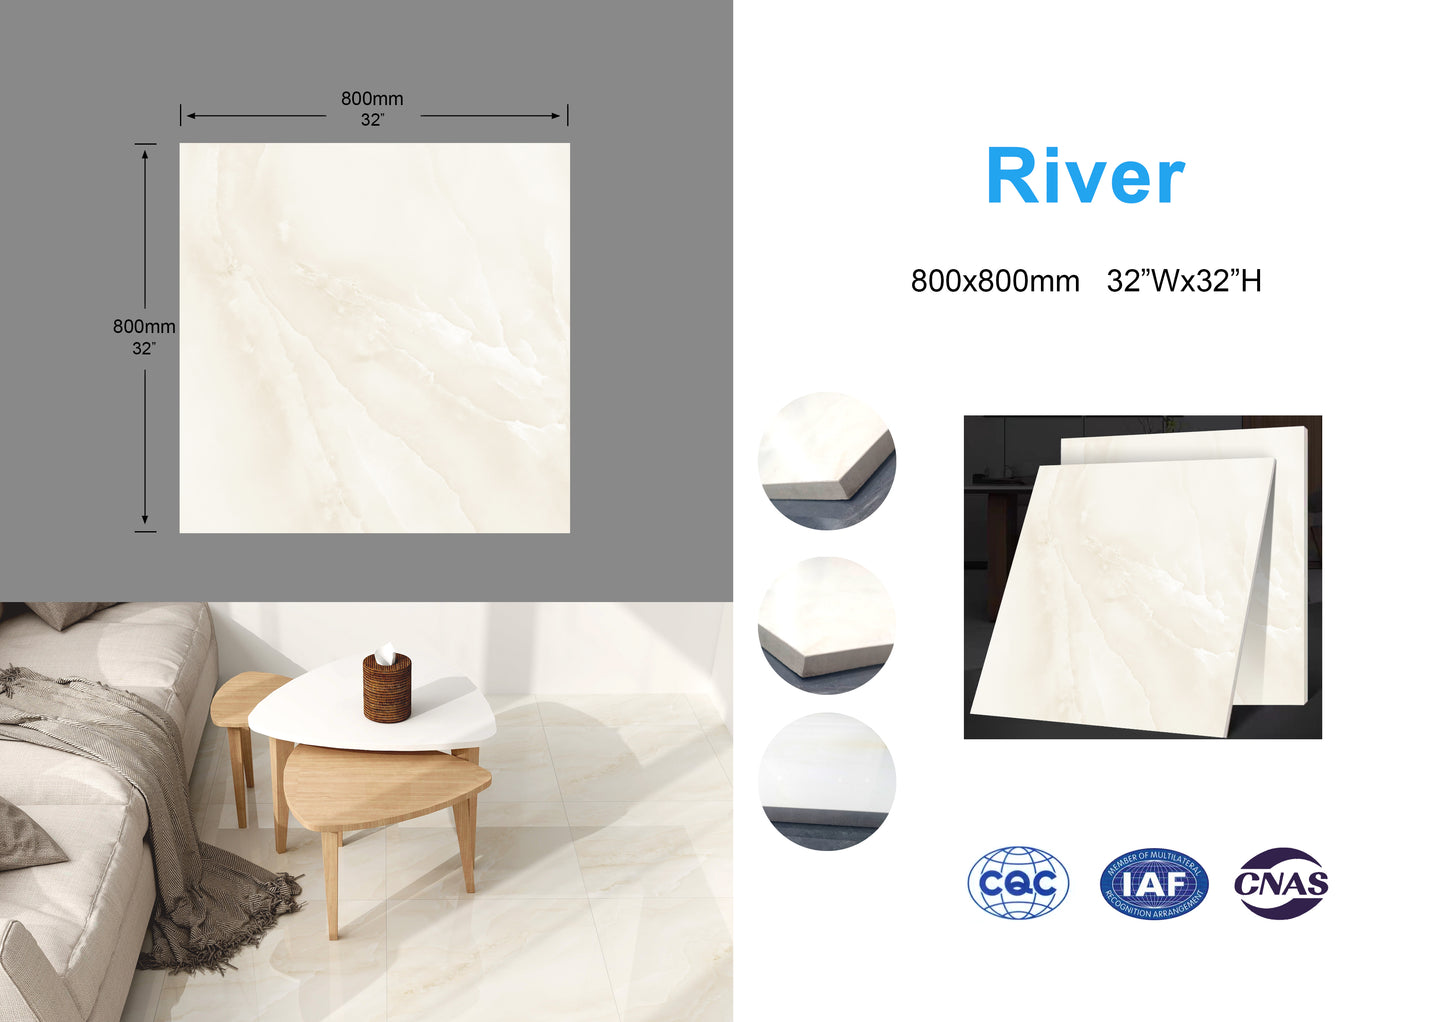 River family Full Polished Glazed Tile 32"x32" 3pcs/box 21.33sf/box $1.59/sf (15 days return/exchange) Bulk Deal 2000sf+ $1.39/SF(No return/no exchange)